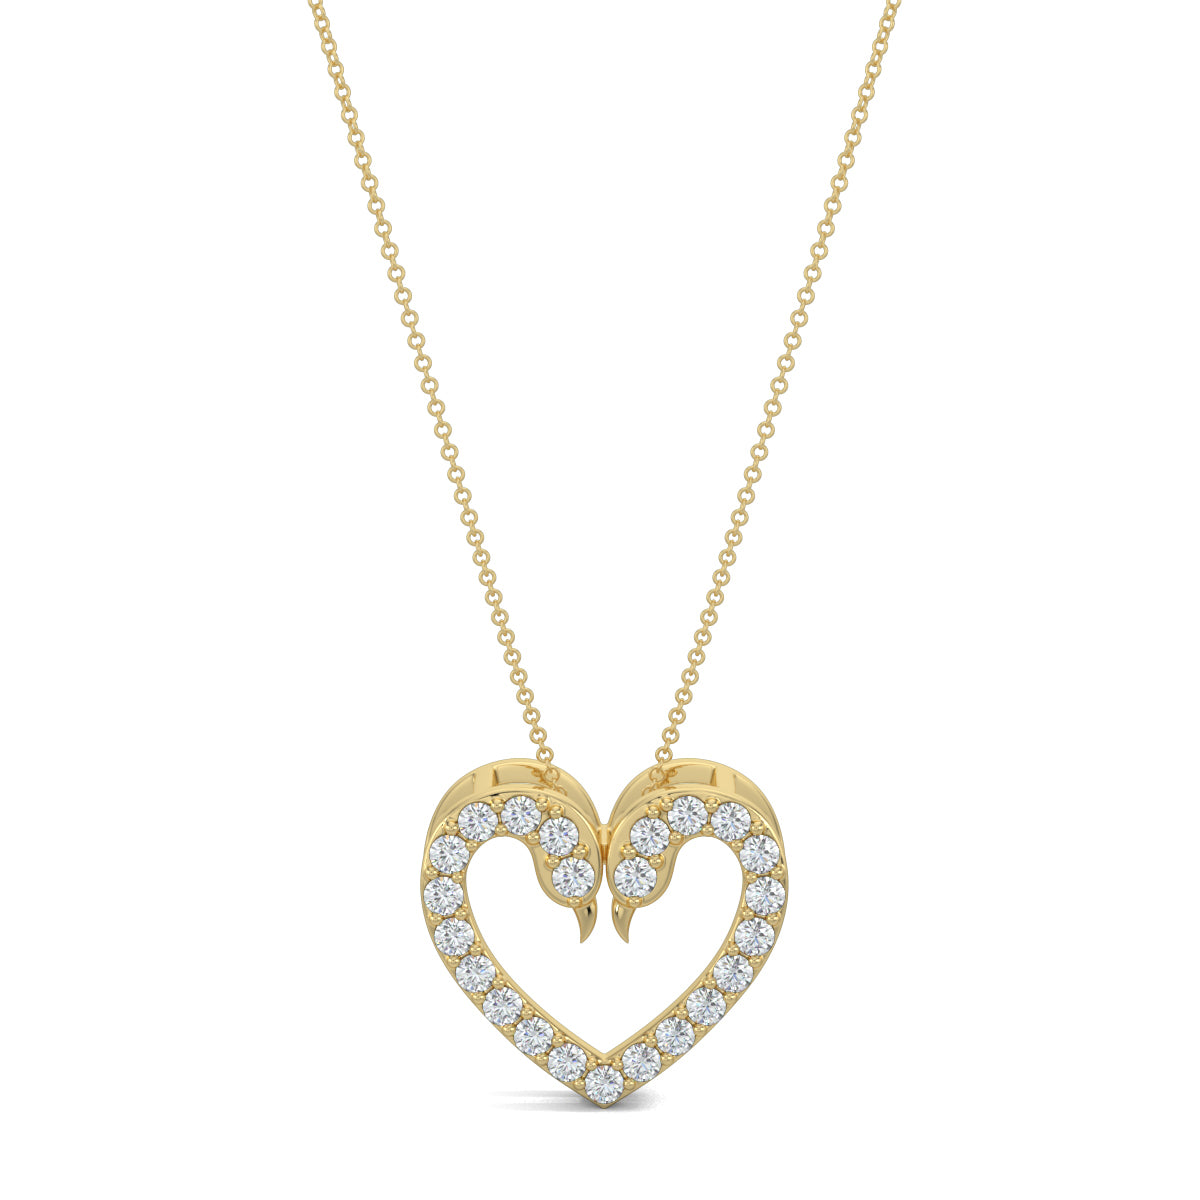 Yellow Gold, Diamond Pendants, natural diamond pendant, lab-grown diamond pendant, Lovebird Diamond Pendant, Forever Yours Collection, Heart Pendant, Casual Pendant, Swan Shape, Diamond Jewelry